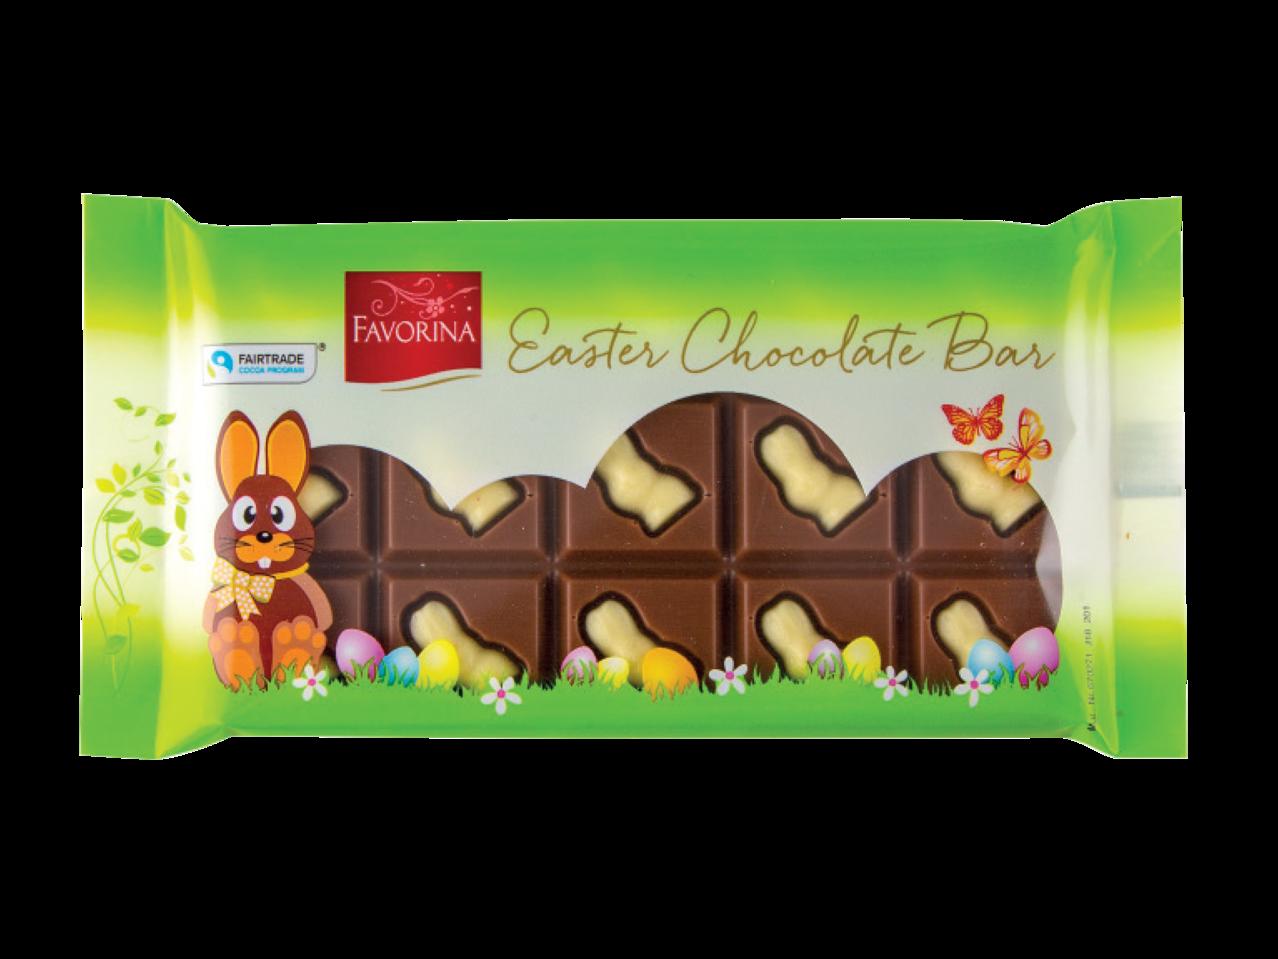 Easter Chocolate Bars